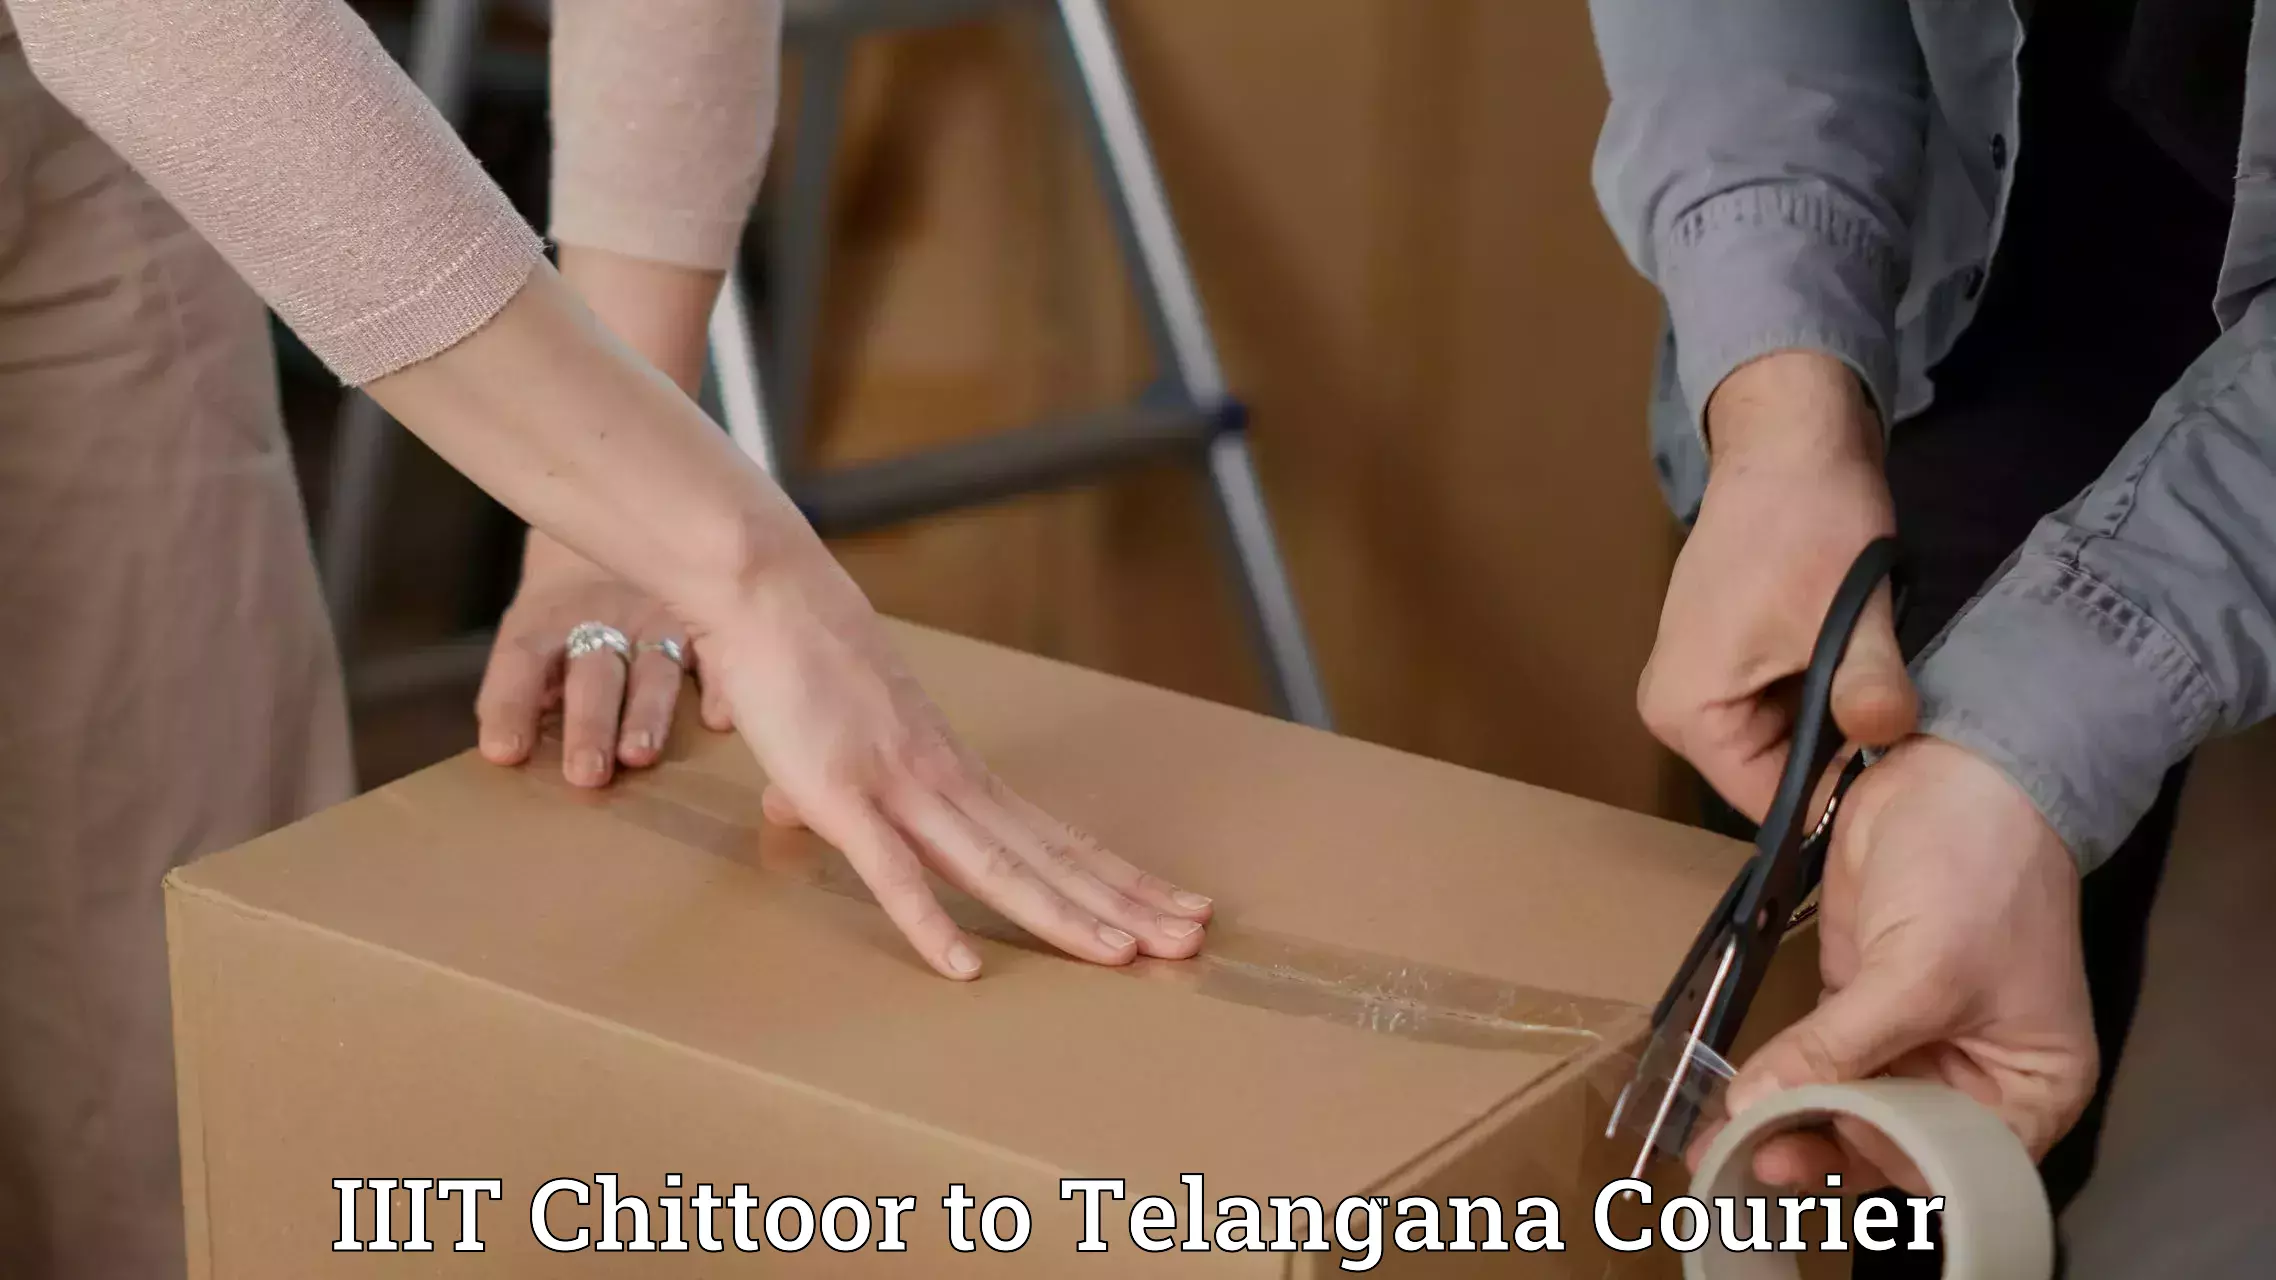 24/7 courier service in IIIT Chittoor to Eligedu